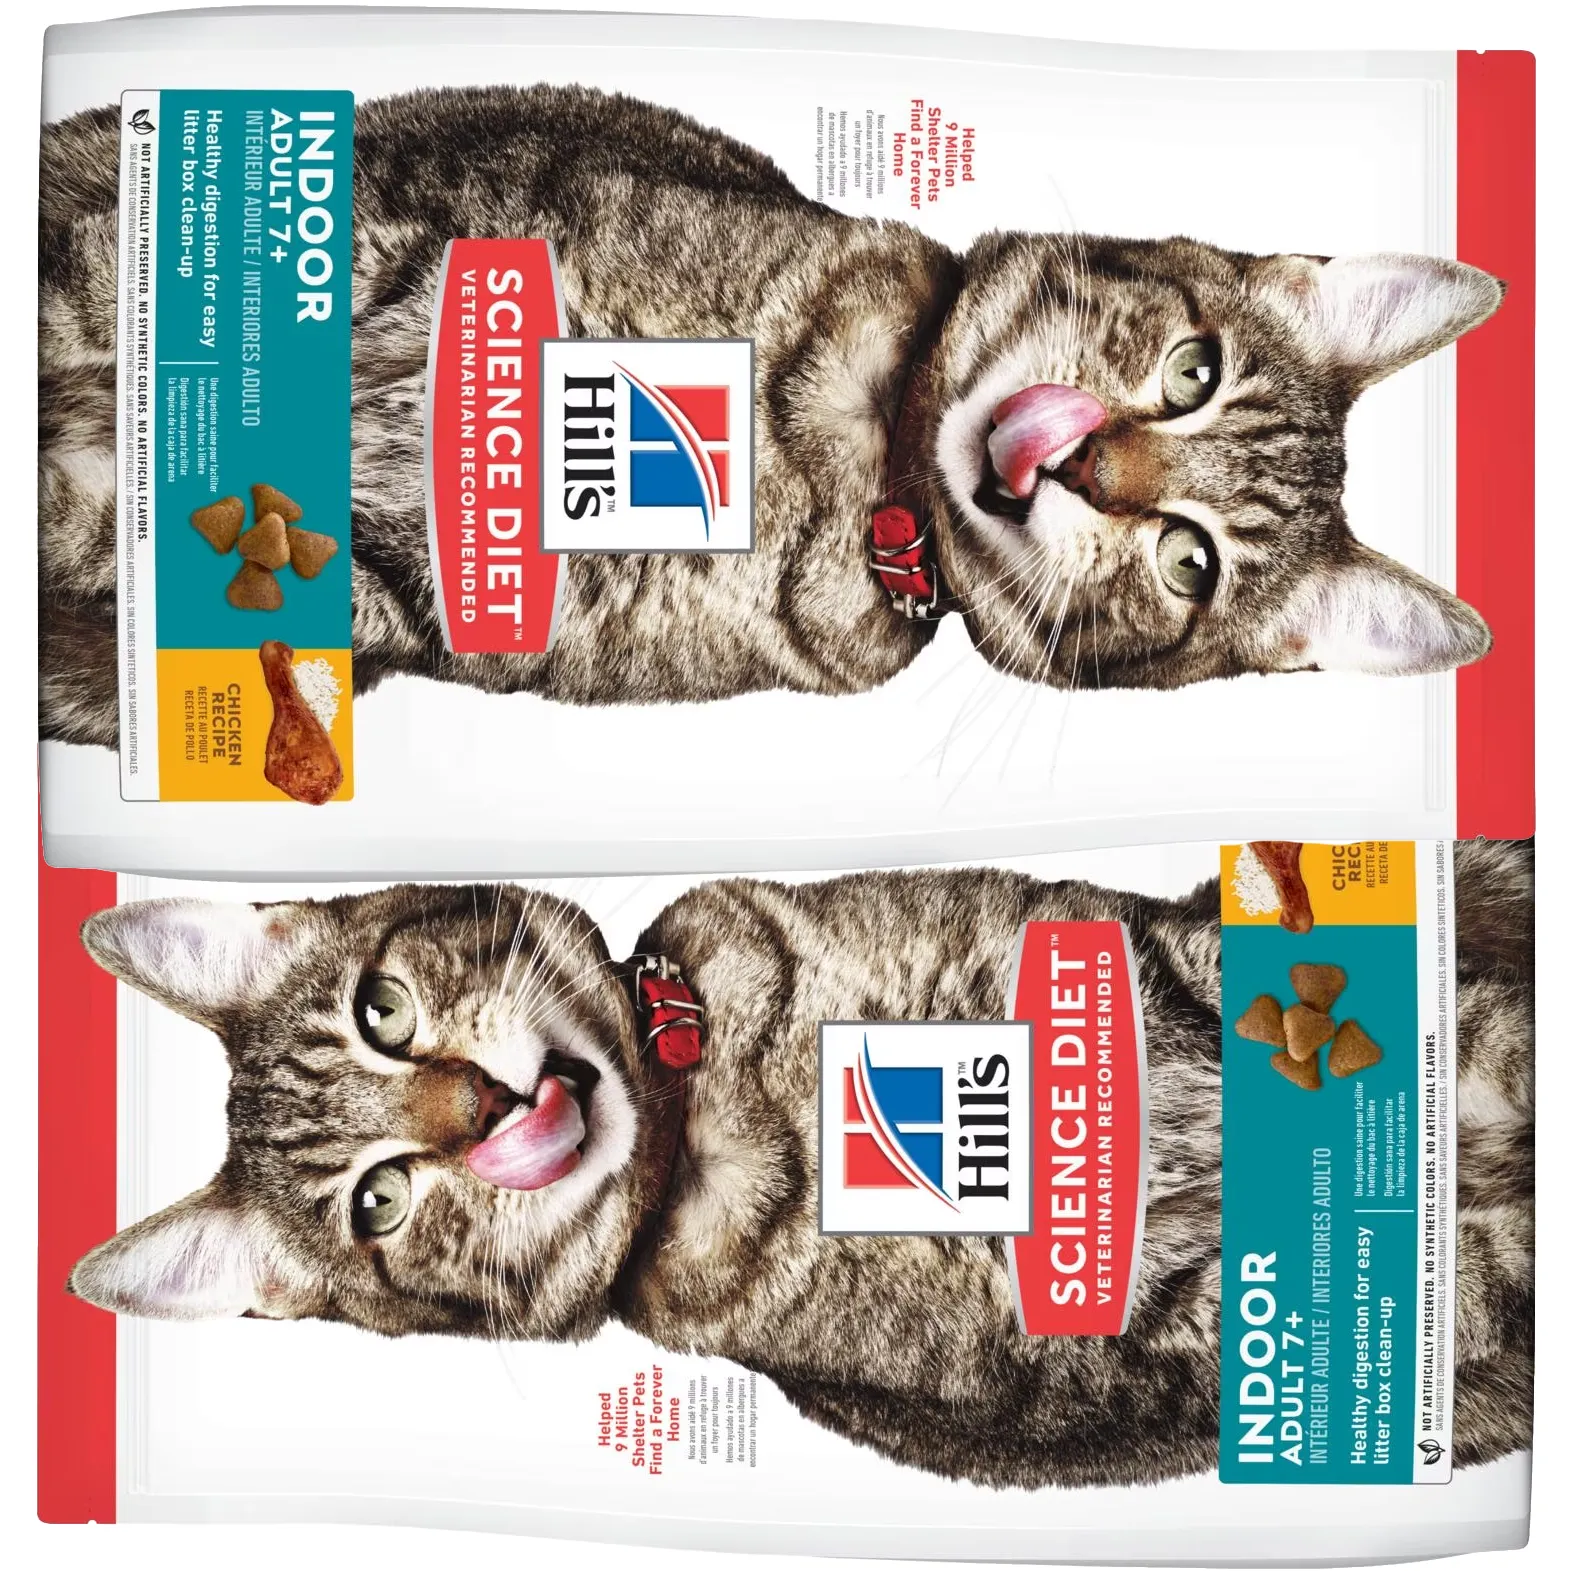 Free Hill's Science Diet Cat Food